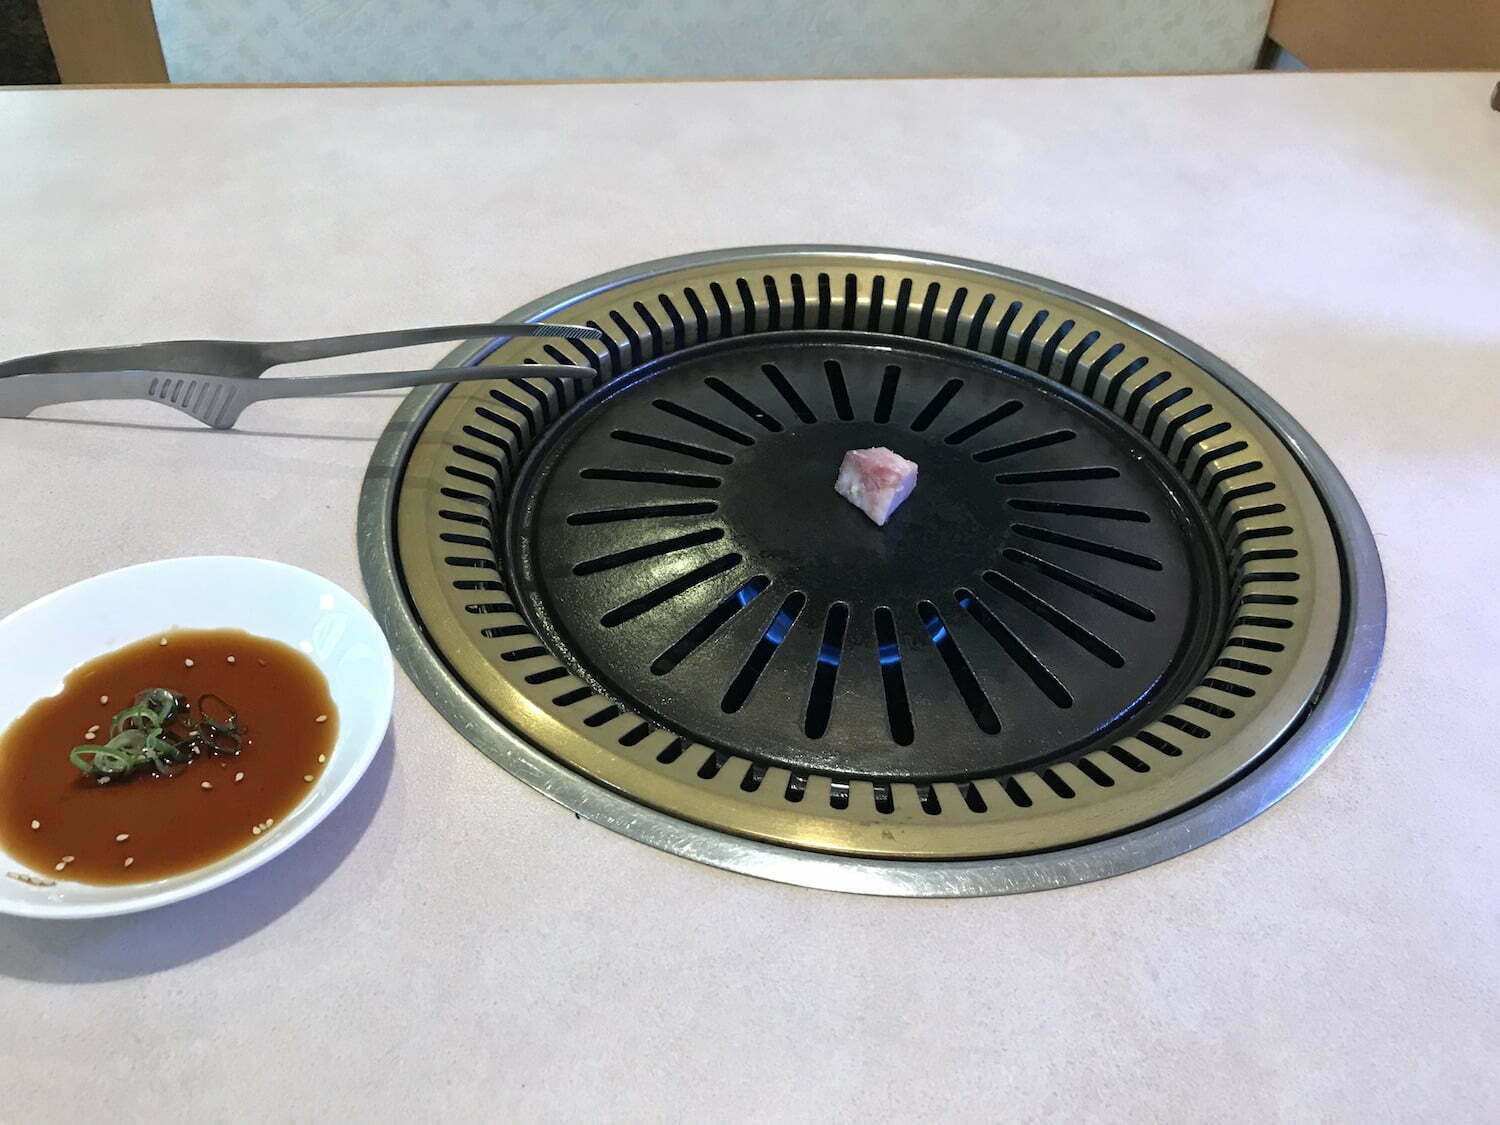 Heat plate